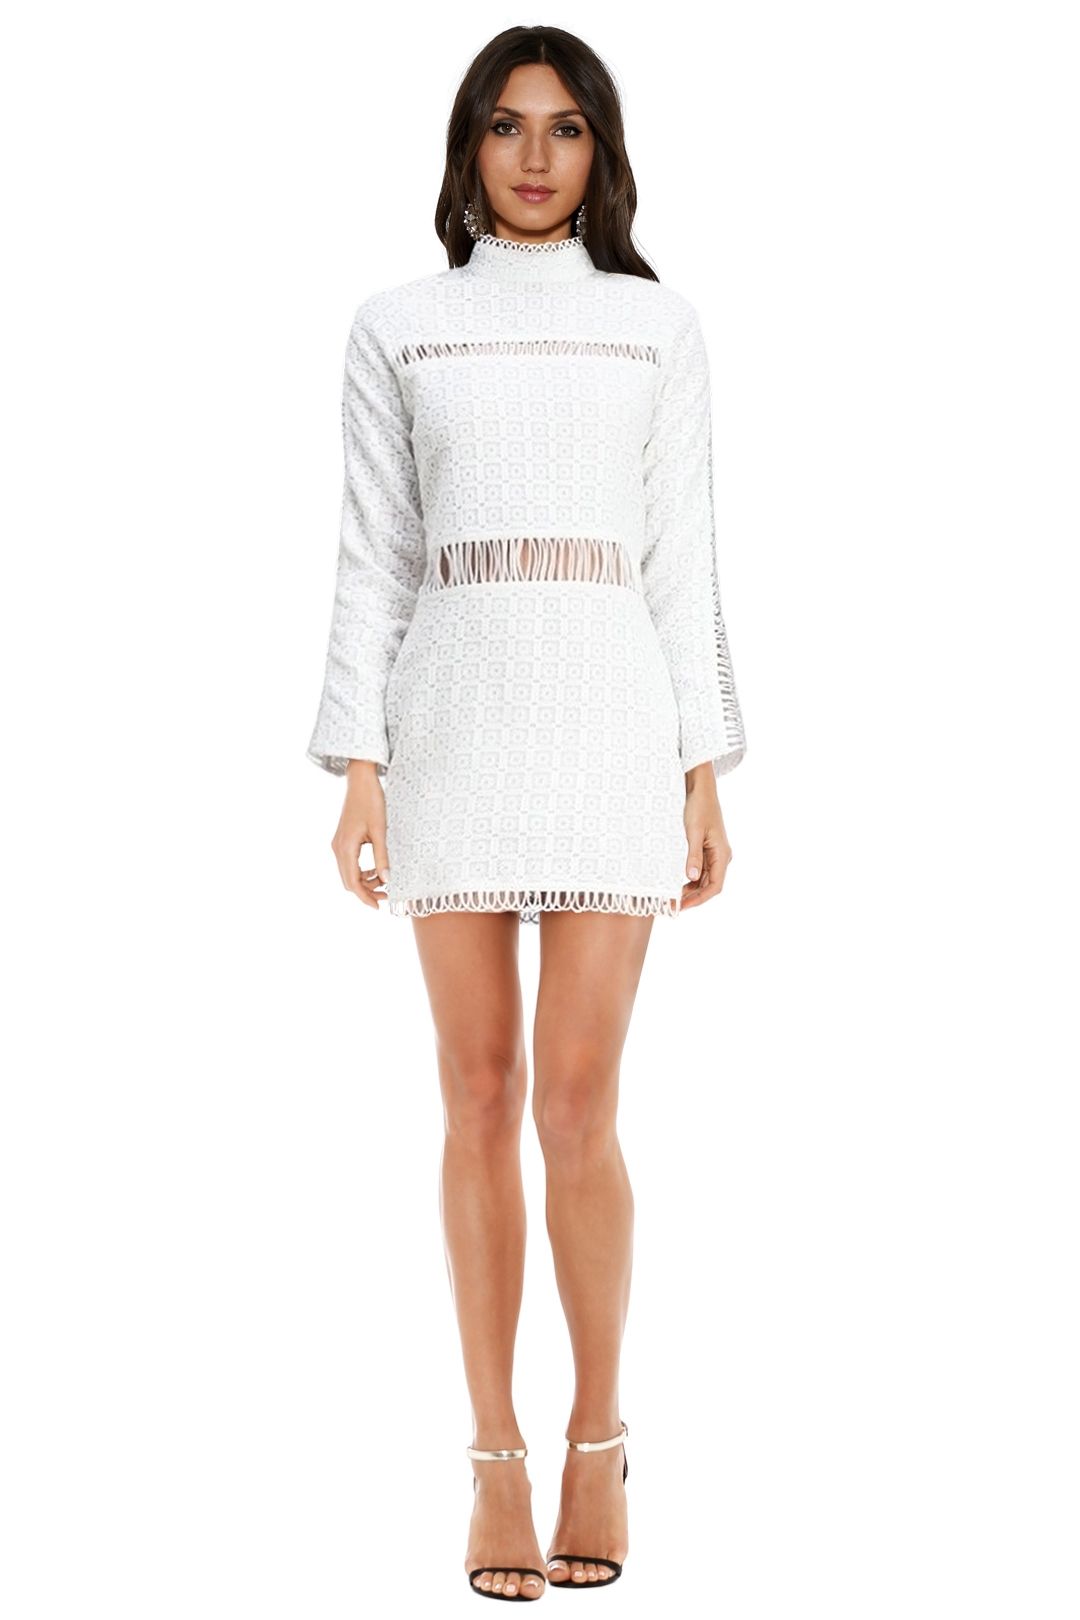 Shakuhachi - Cut Out Lace Panelled Mini Dress - White - Front